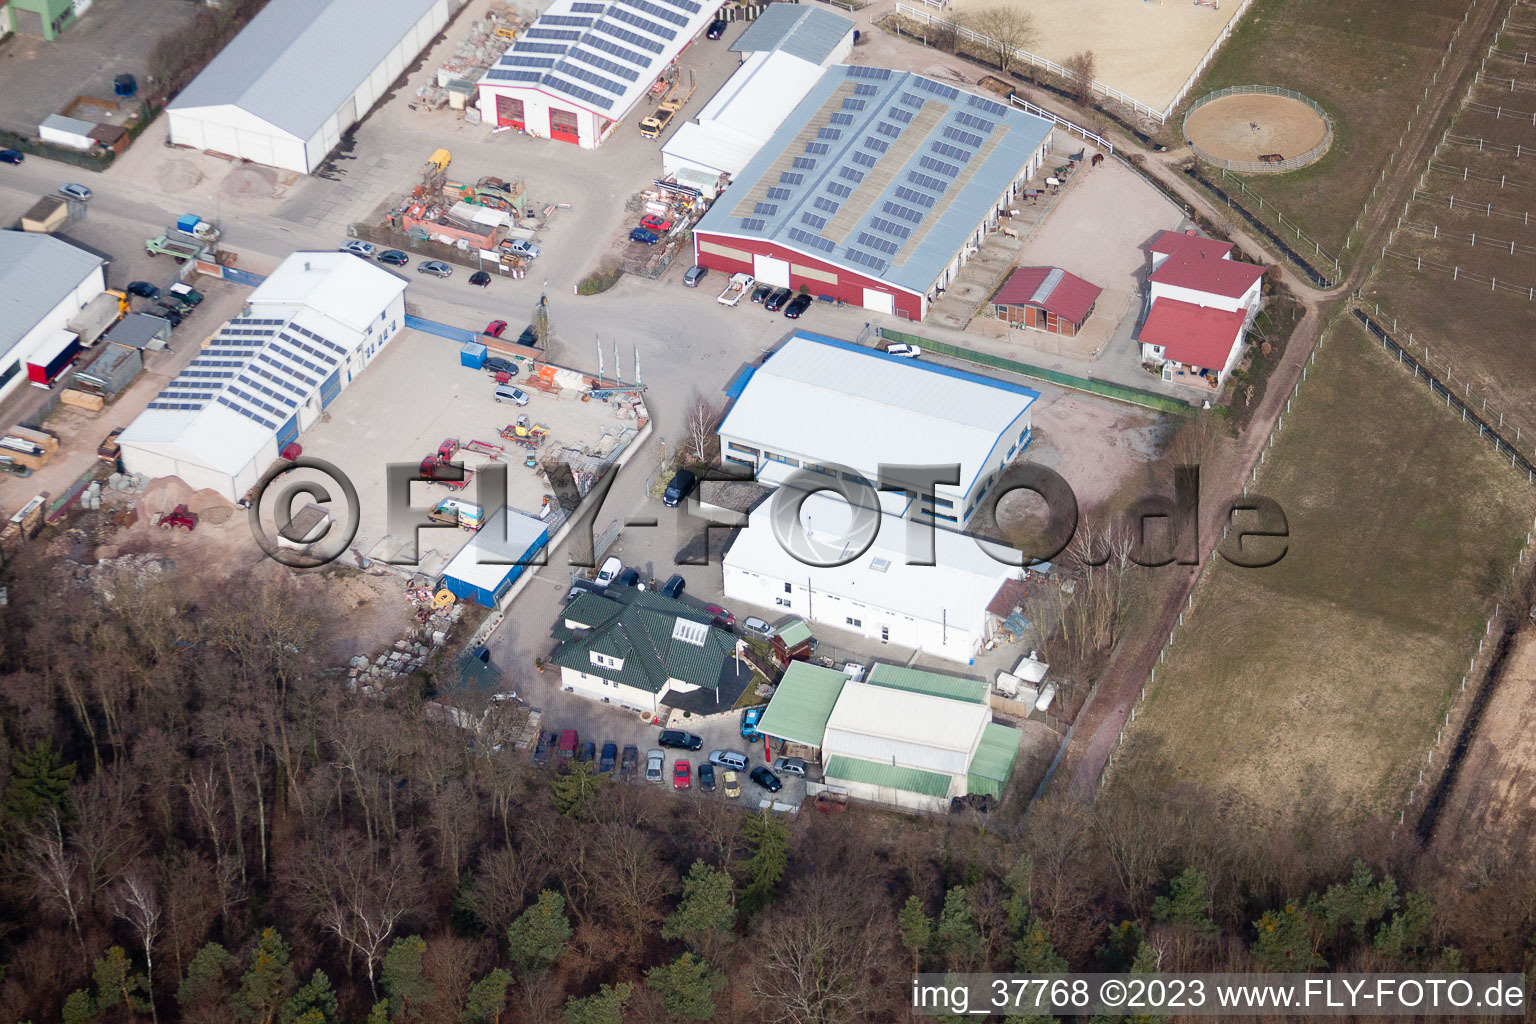 Aerial view of Gäxwald industrial area in the district Herxheim in Herxheim bei Landau/Pfalz in the state Rhineland-Palatinate, Germany